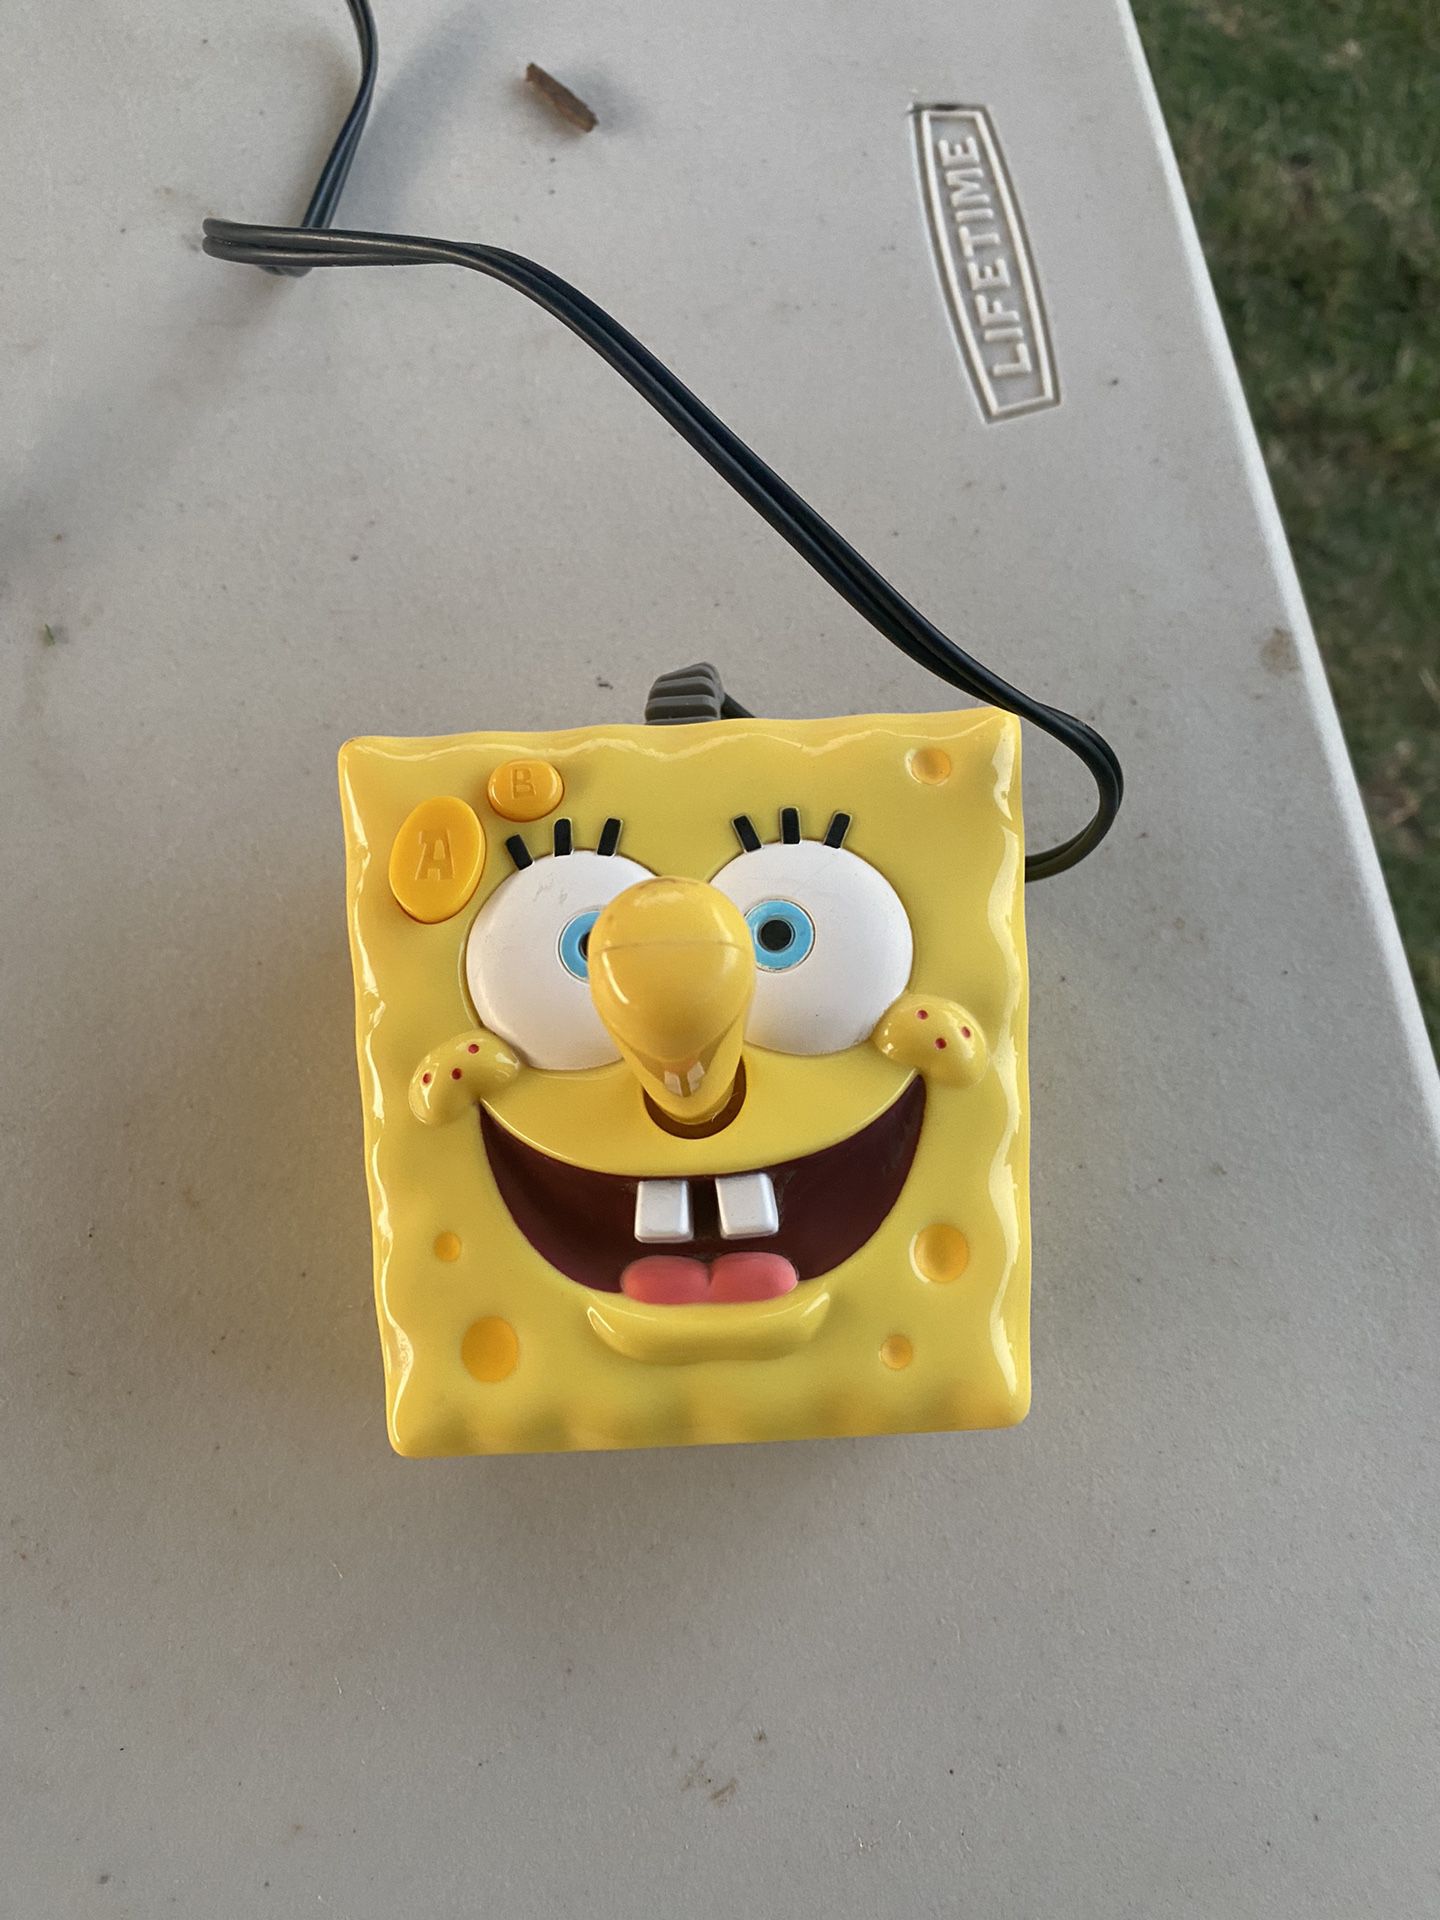 Spongebob Plug-In Play Controller